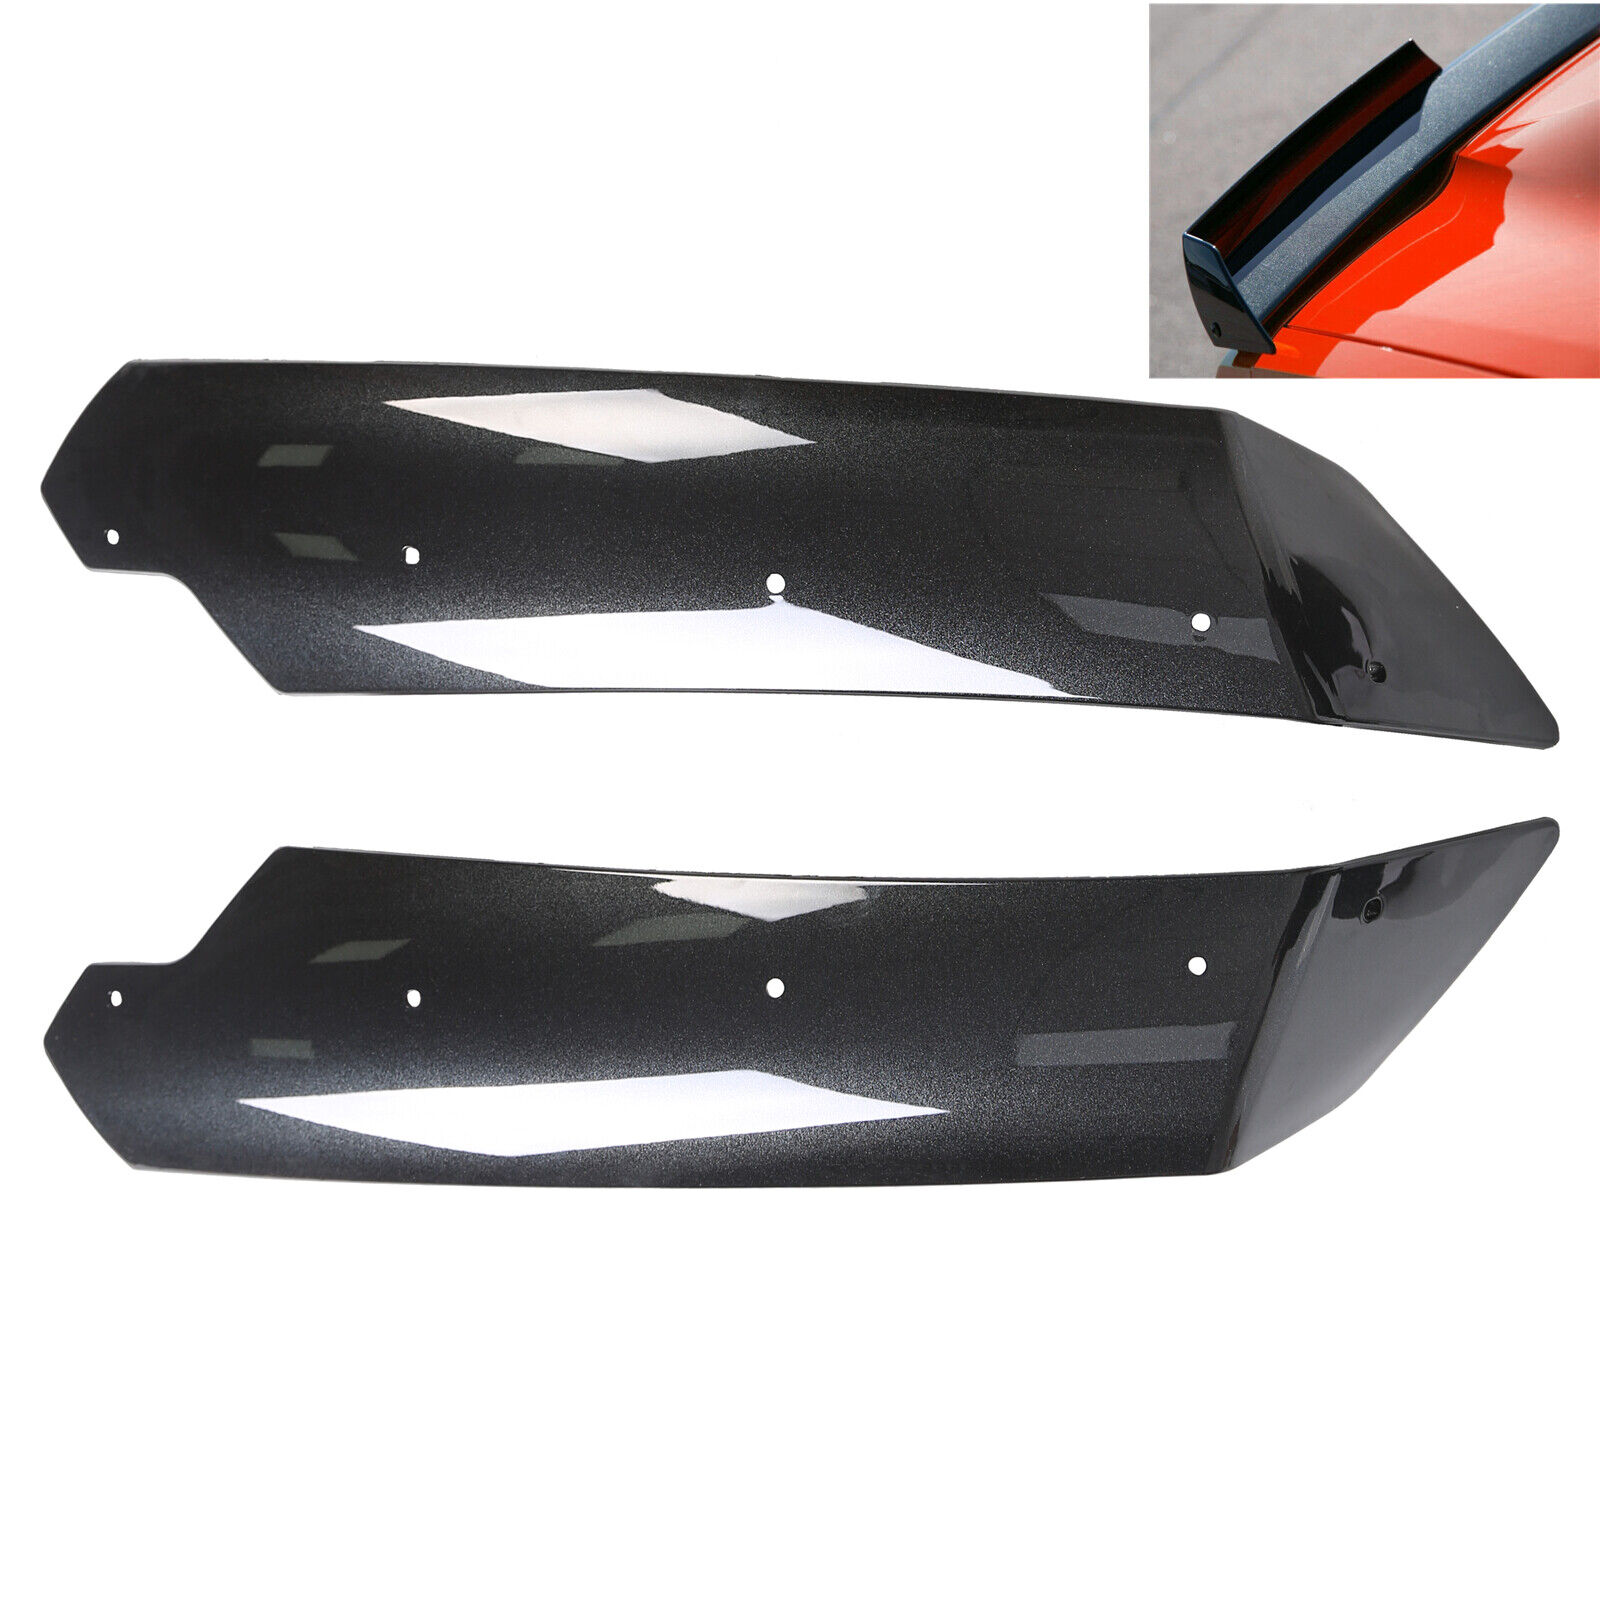 For Corvette C7 Z06 2014-19 Stage 2 Rear Carbon Flash Spoiler Lip Side Winglets